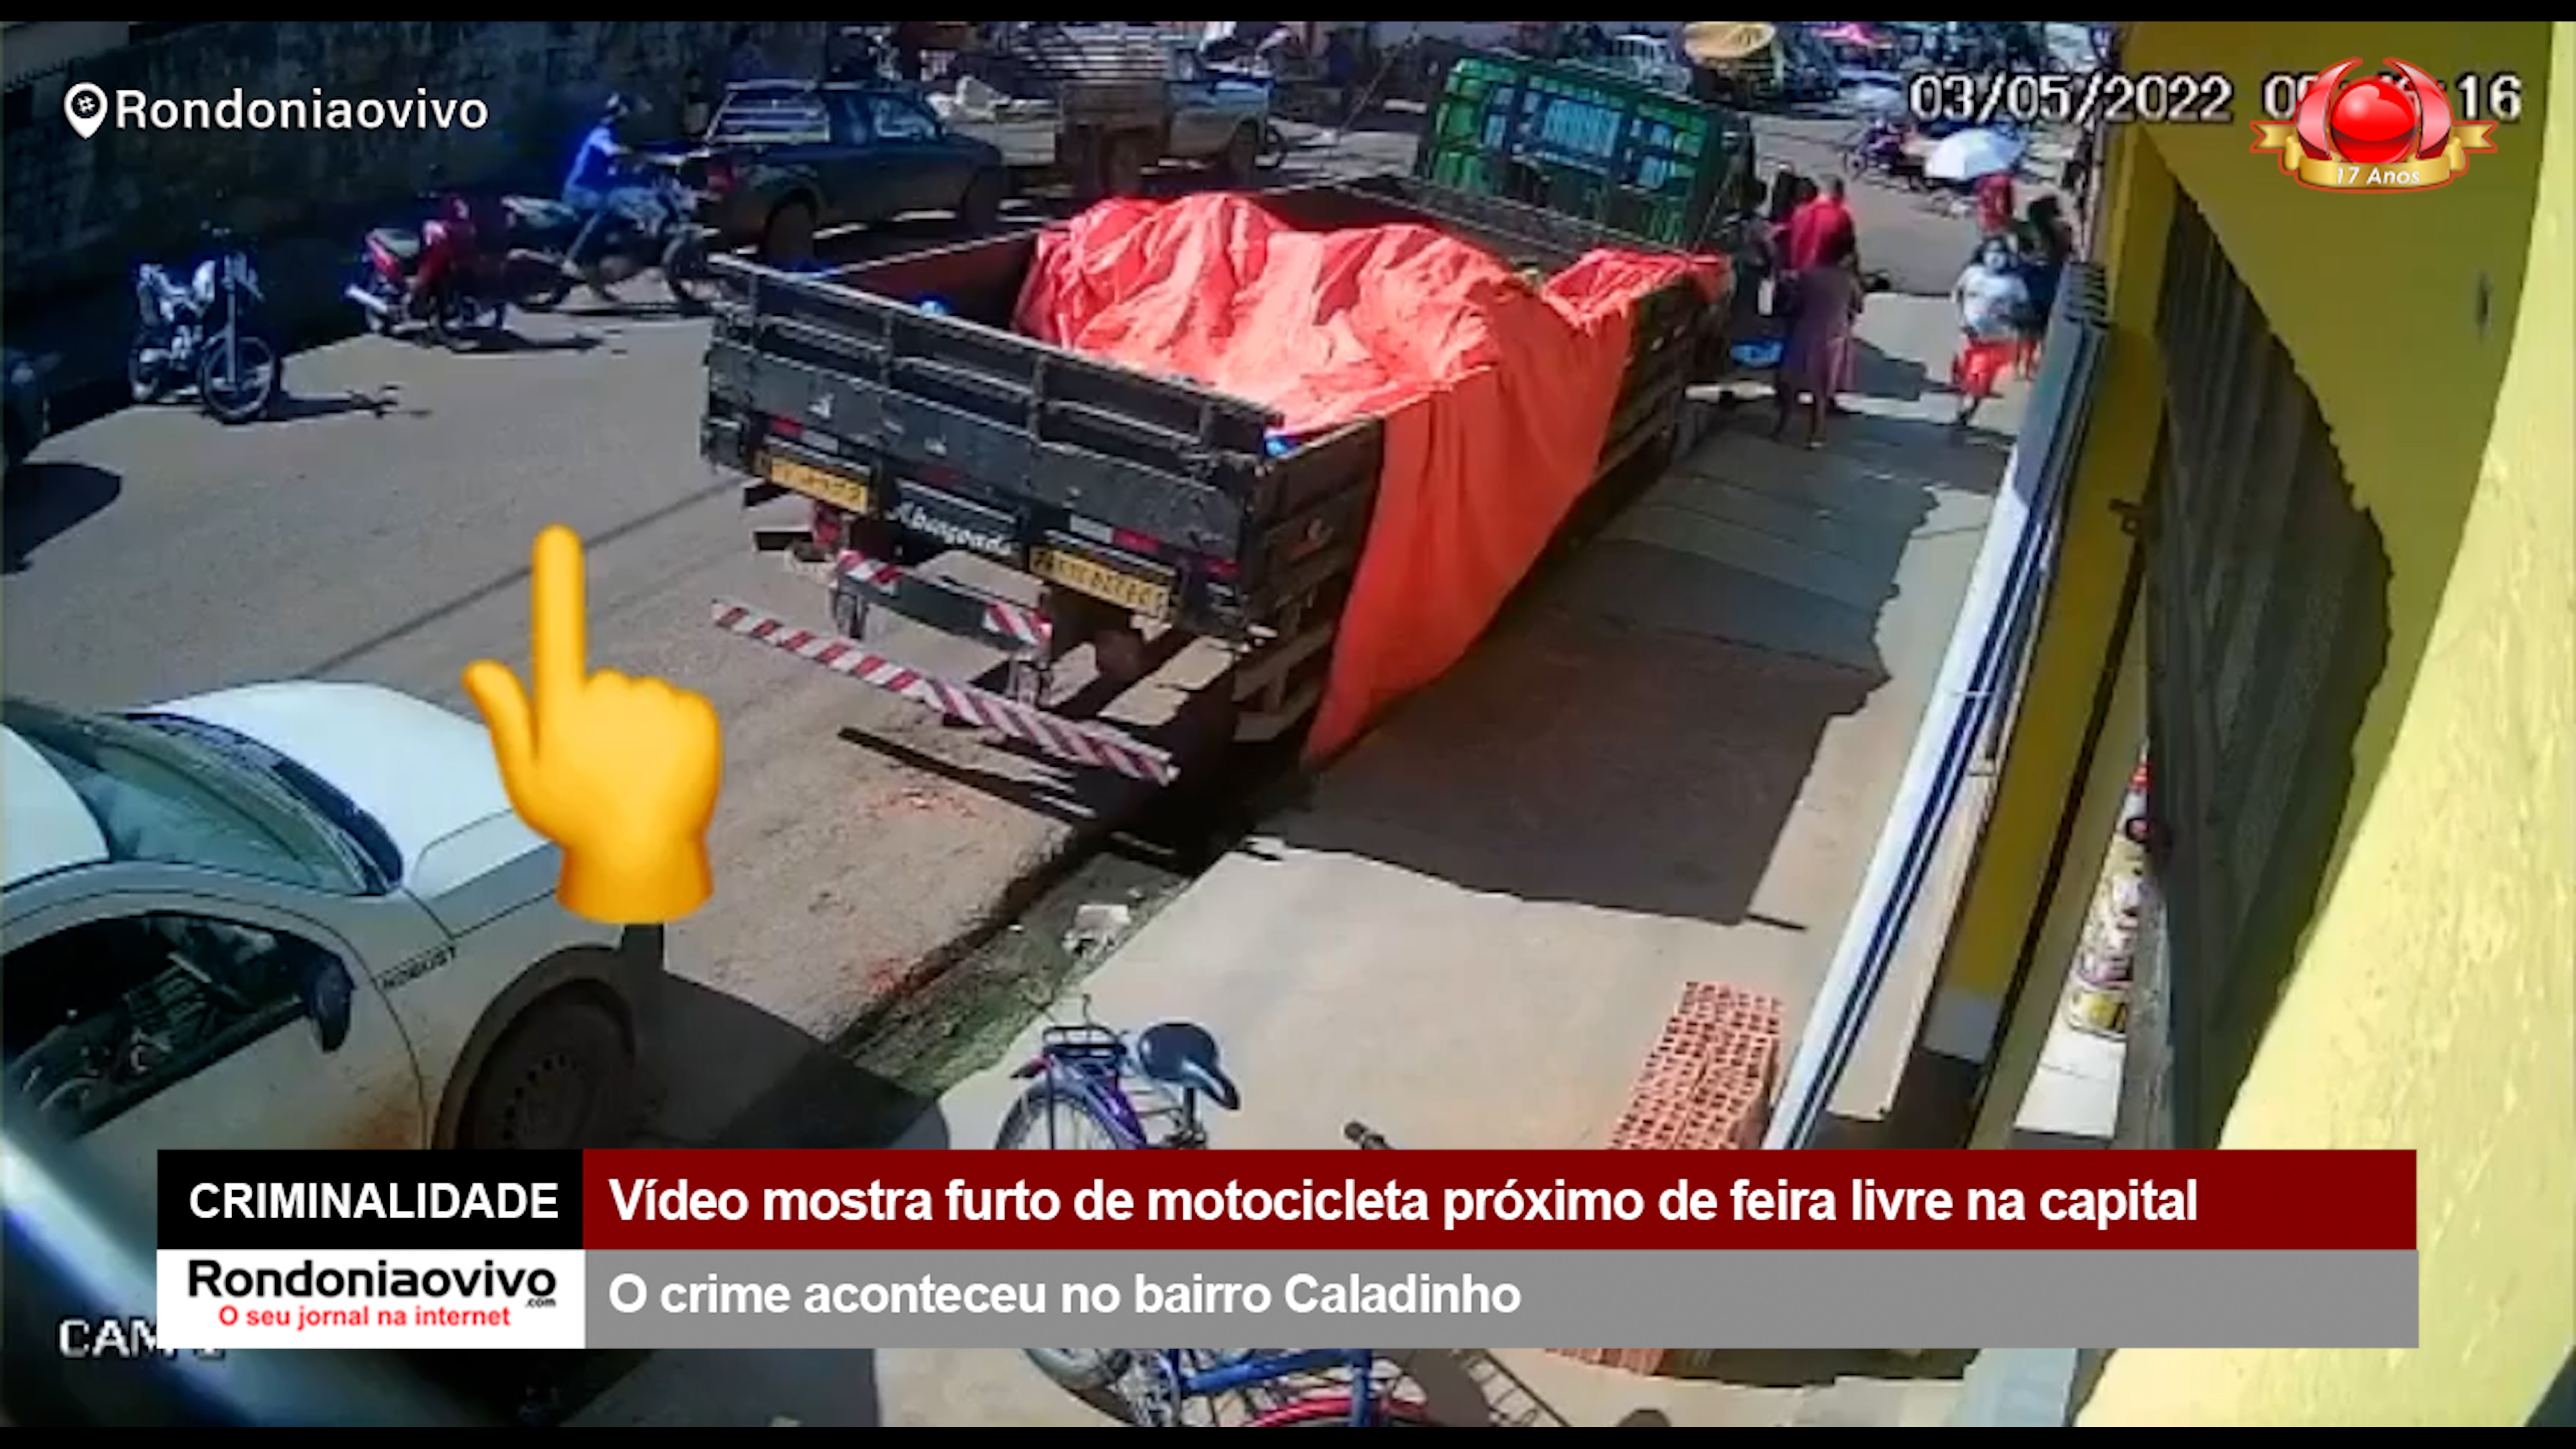 CRIMINALIDADE: Vídeo mostra furto de motocicleta próximo de feira livre na capital